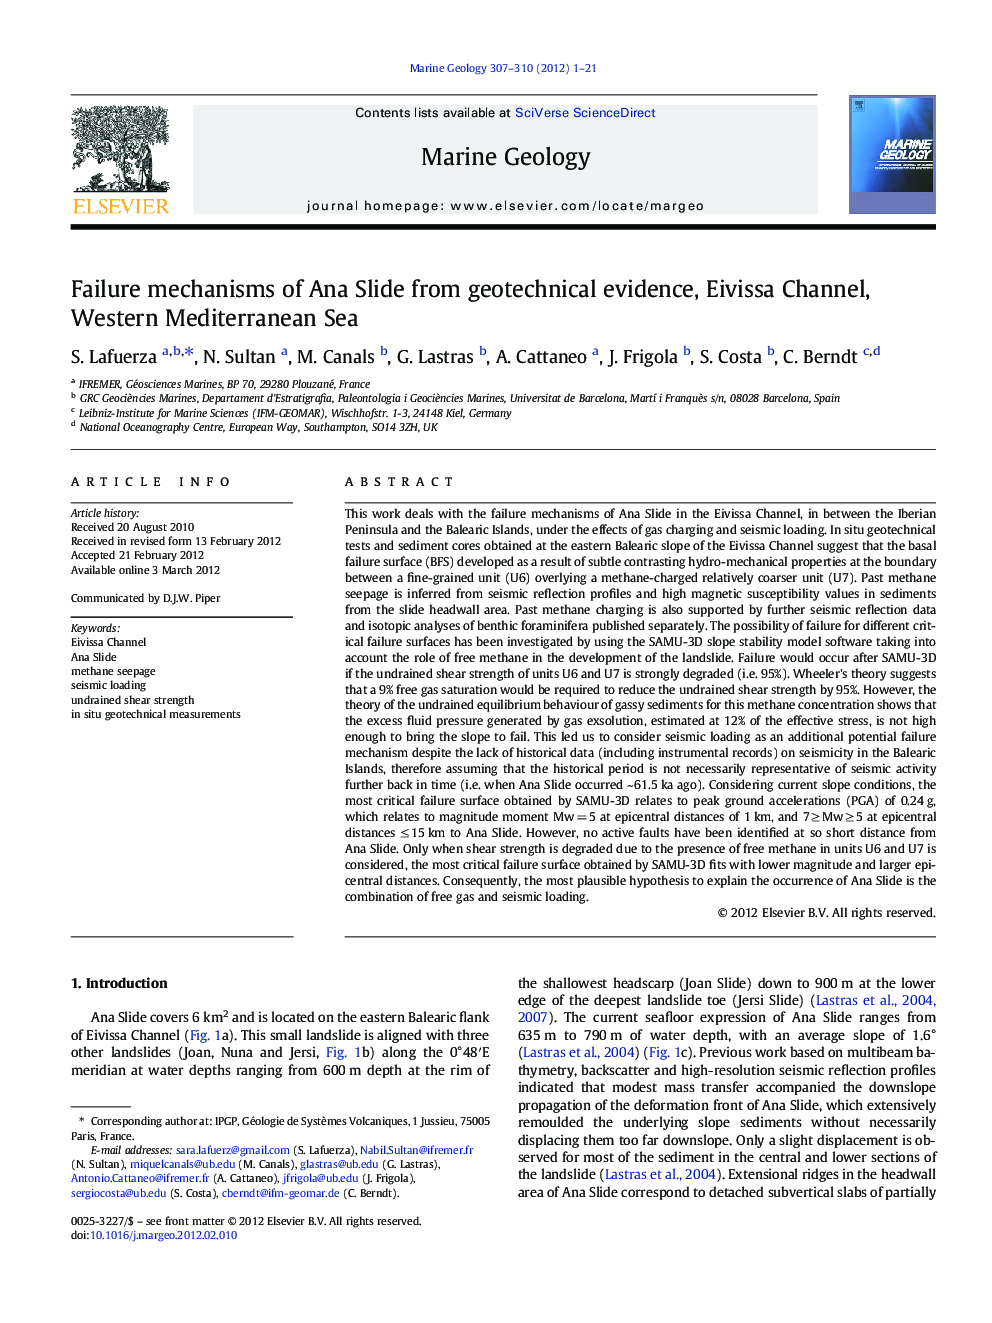 Failure mechanisms of Ana Slide from geotechnical evidence, Eivissa Channel, Western Mediterranean Sea